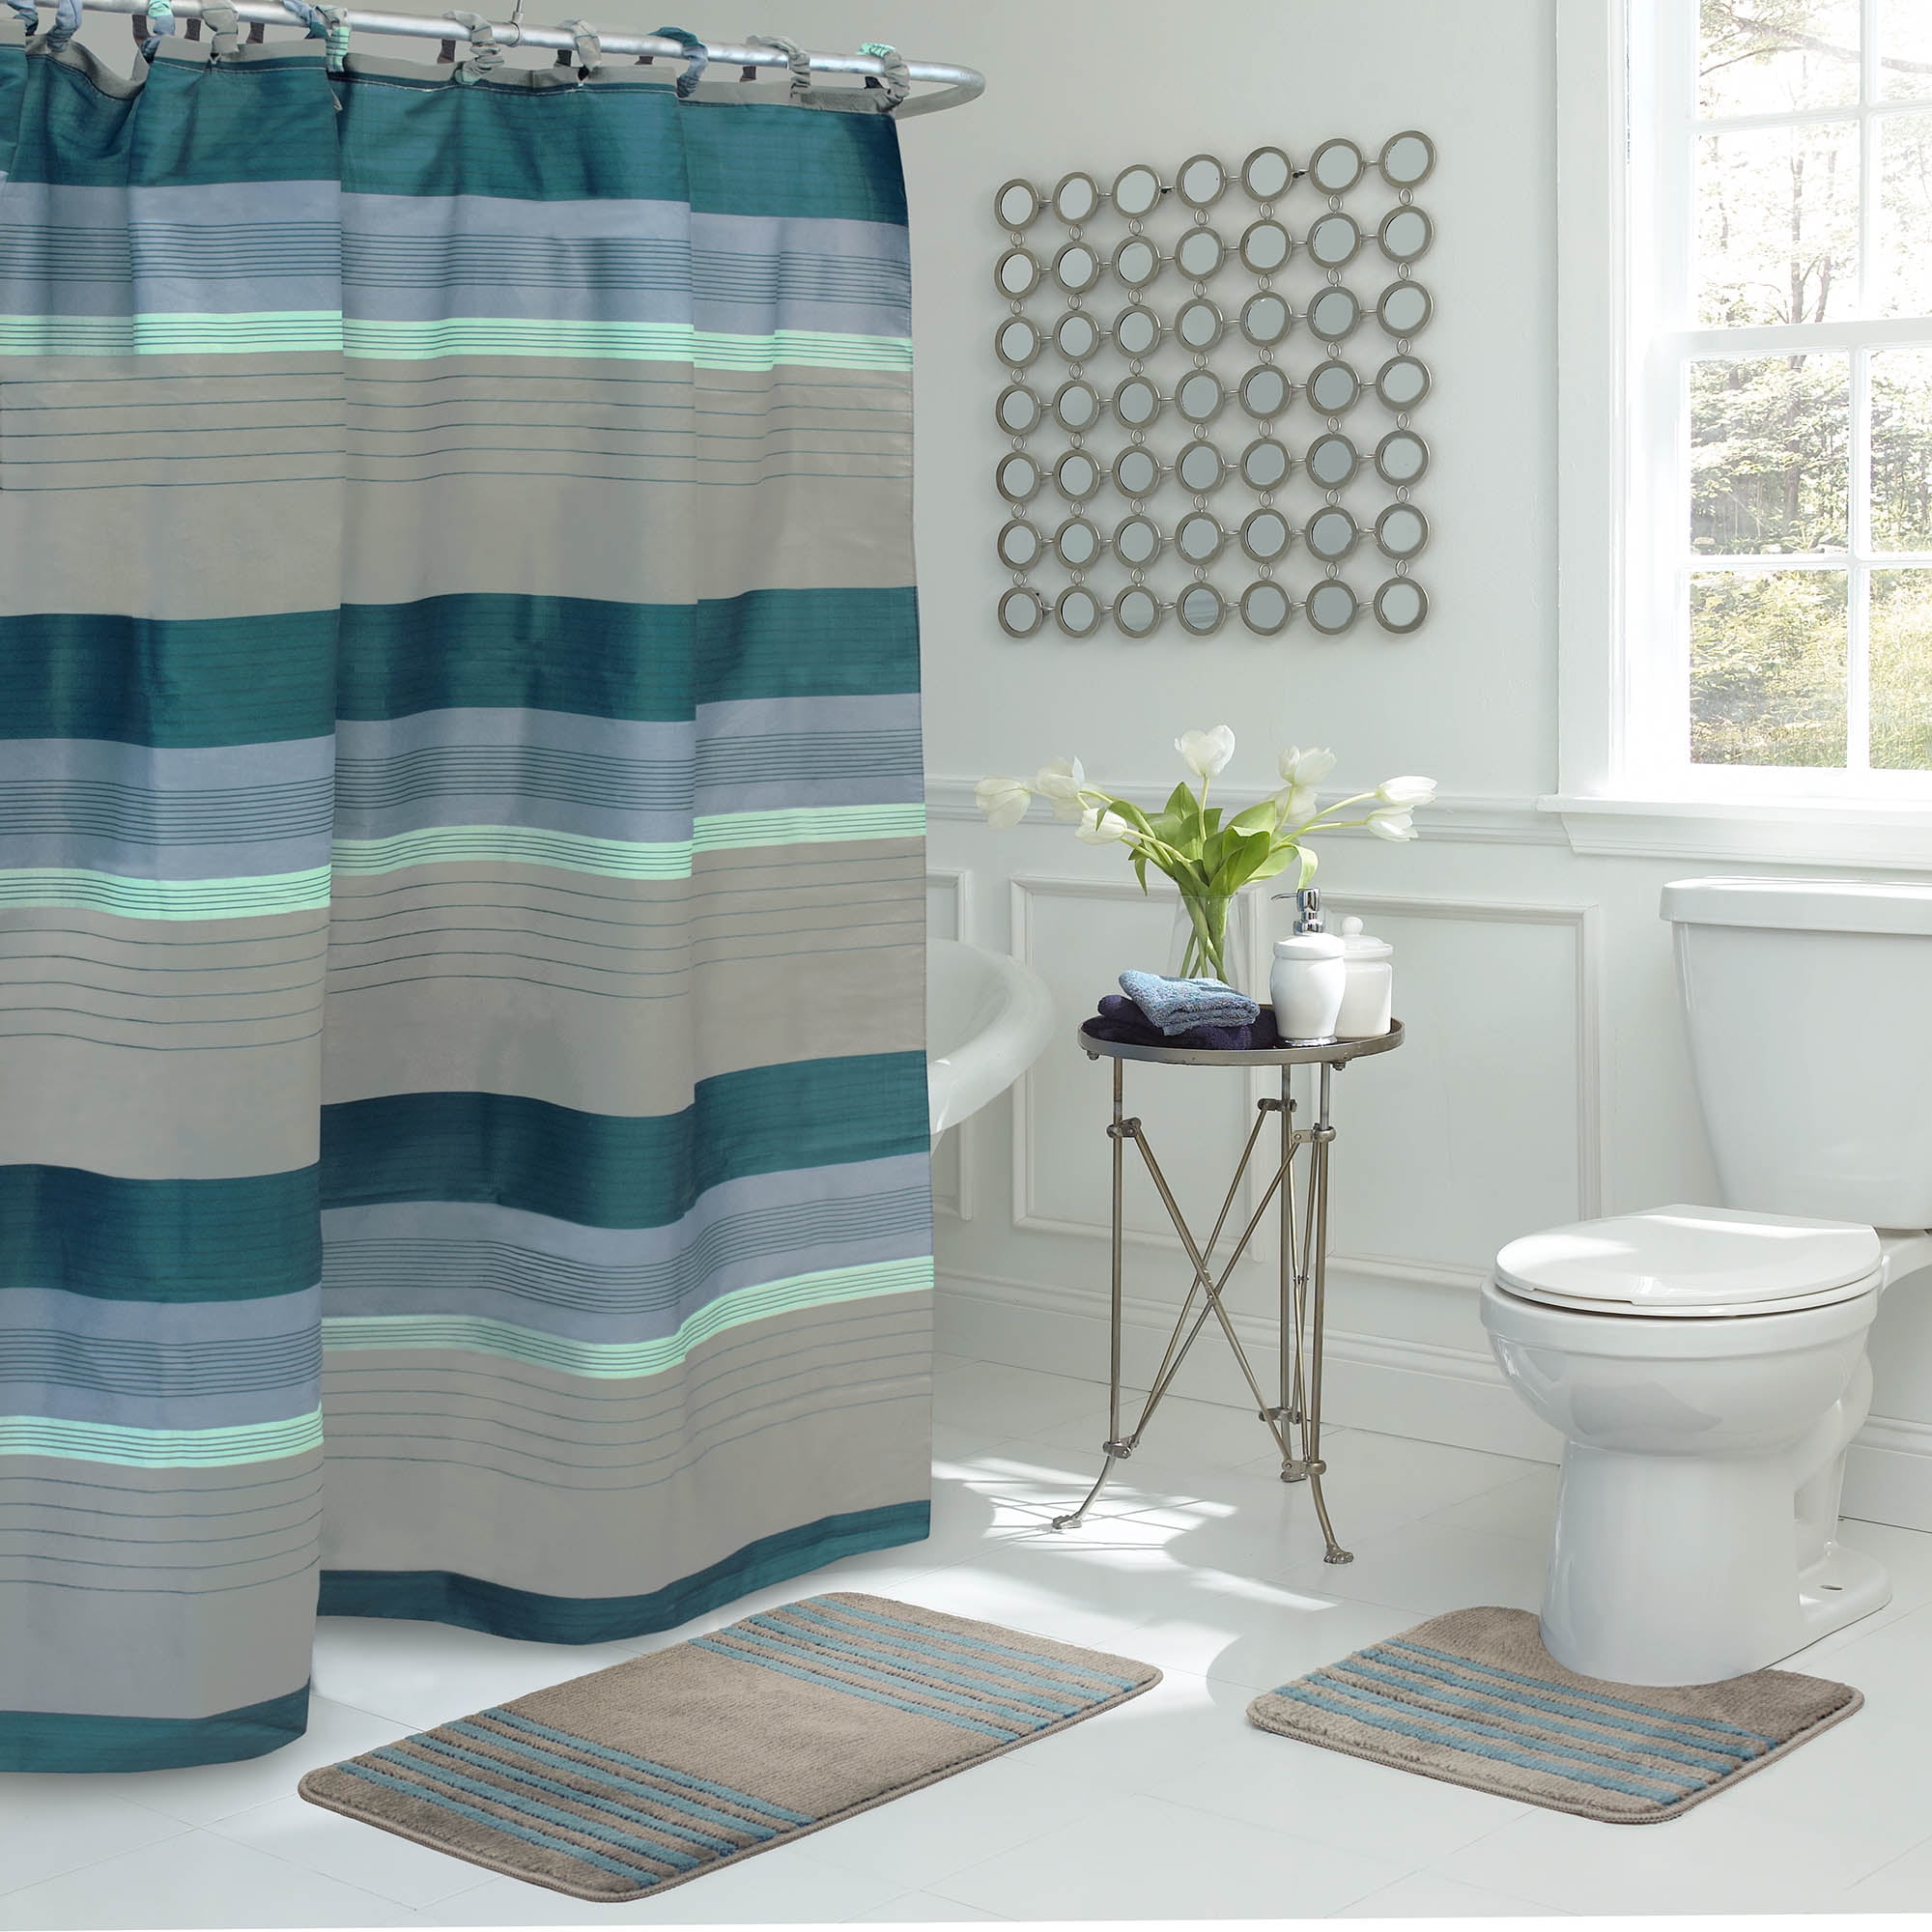 Bathroom Dragon Print Shower Curtain Carpet Foot Pad Toilet Lid Cover Decoration 